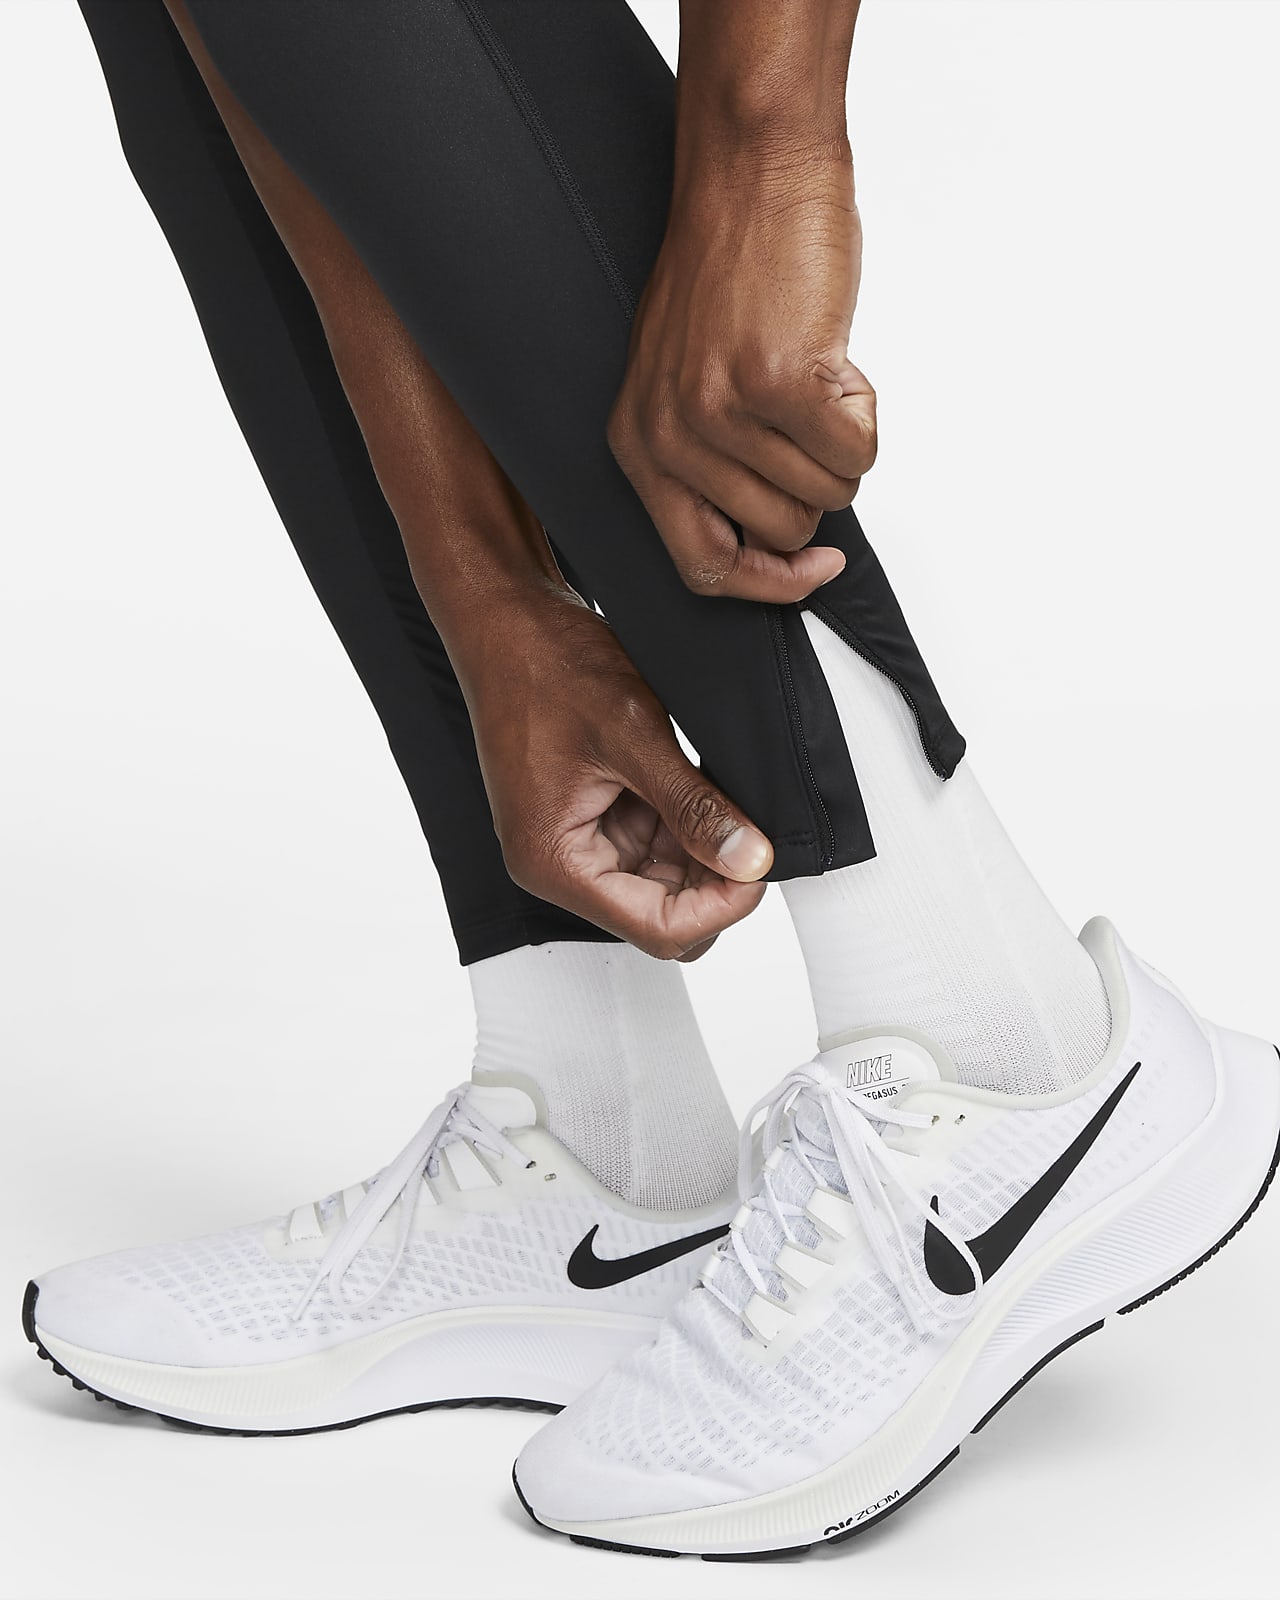 Nike Storm-FIT Phenom Elite Men's Running Tights